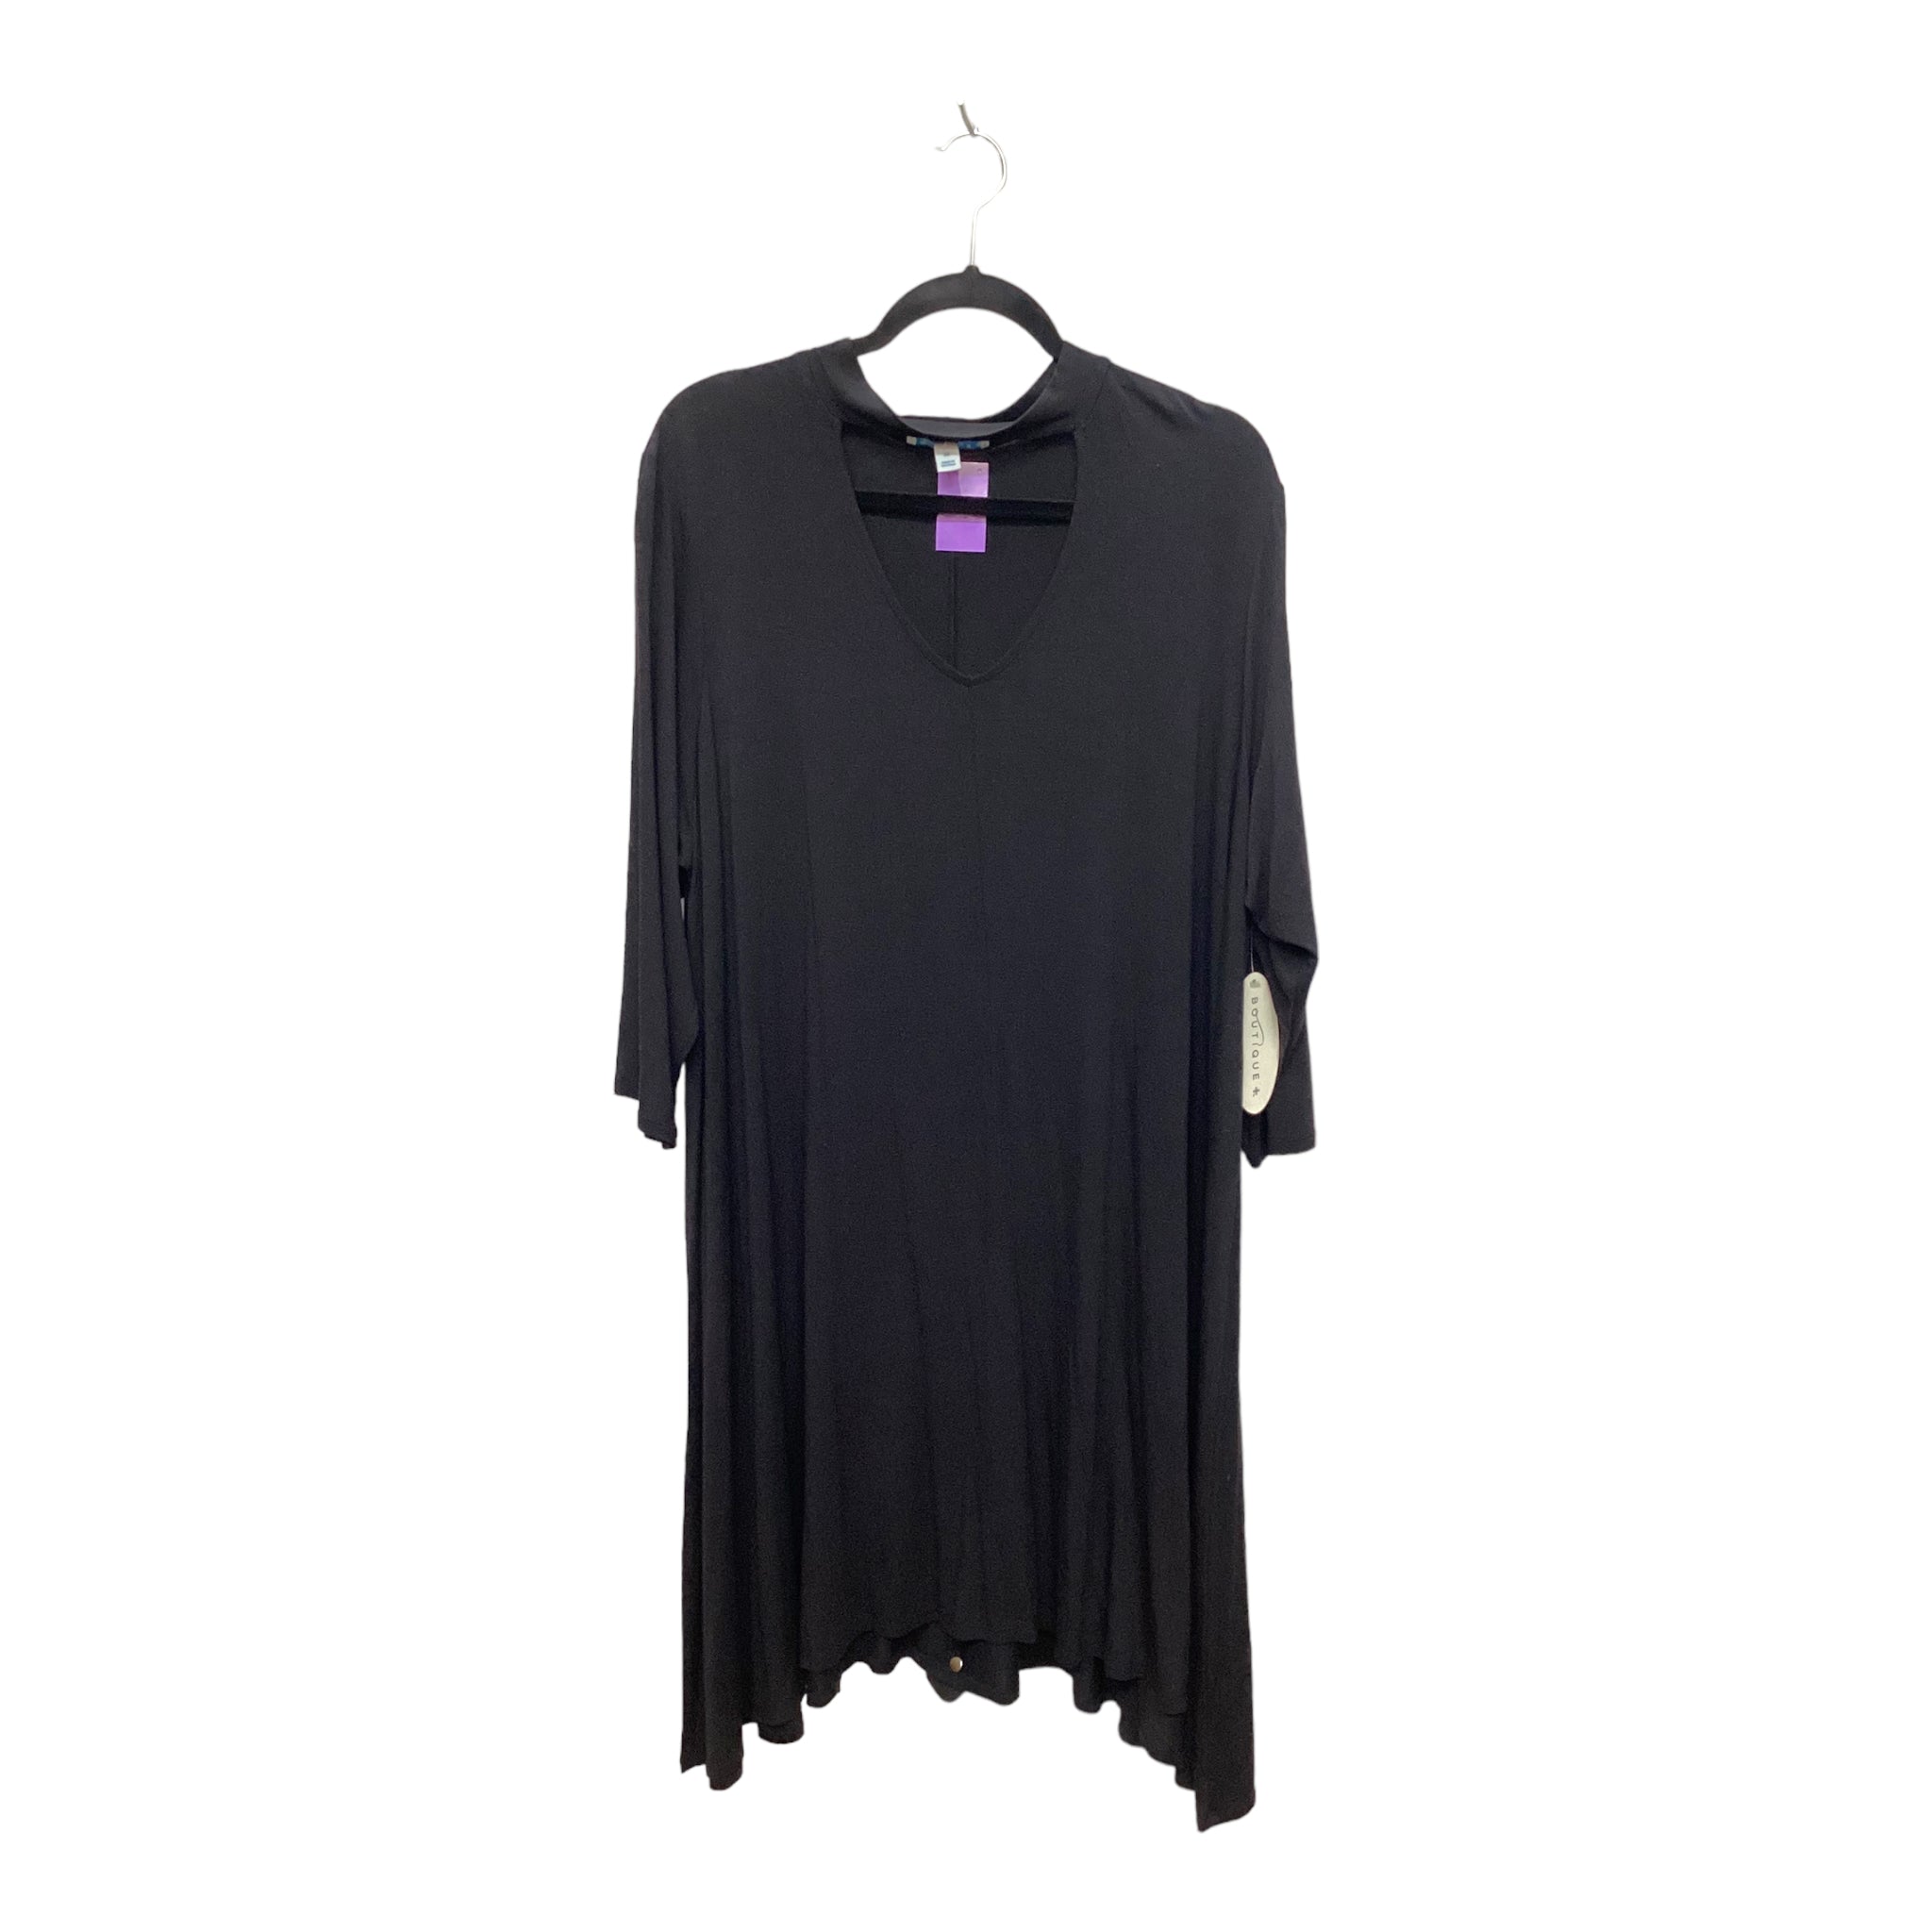 Dress Casual Short By Boutique + Size: 2x – Clothes Mentor Columbus GA #240